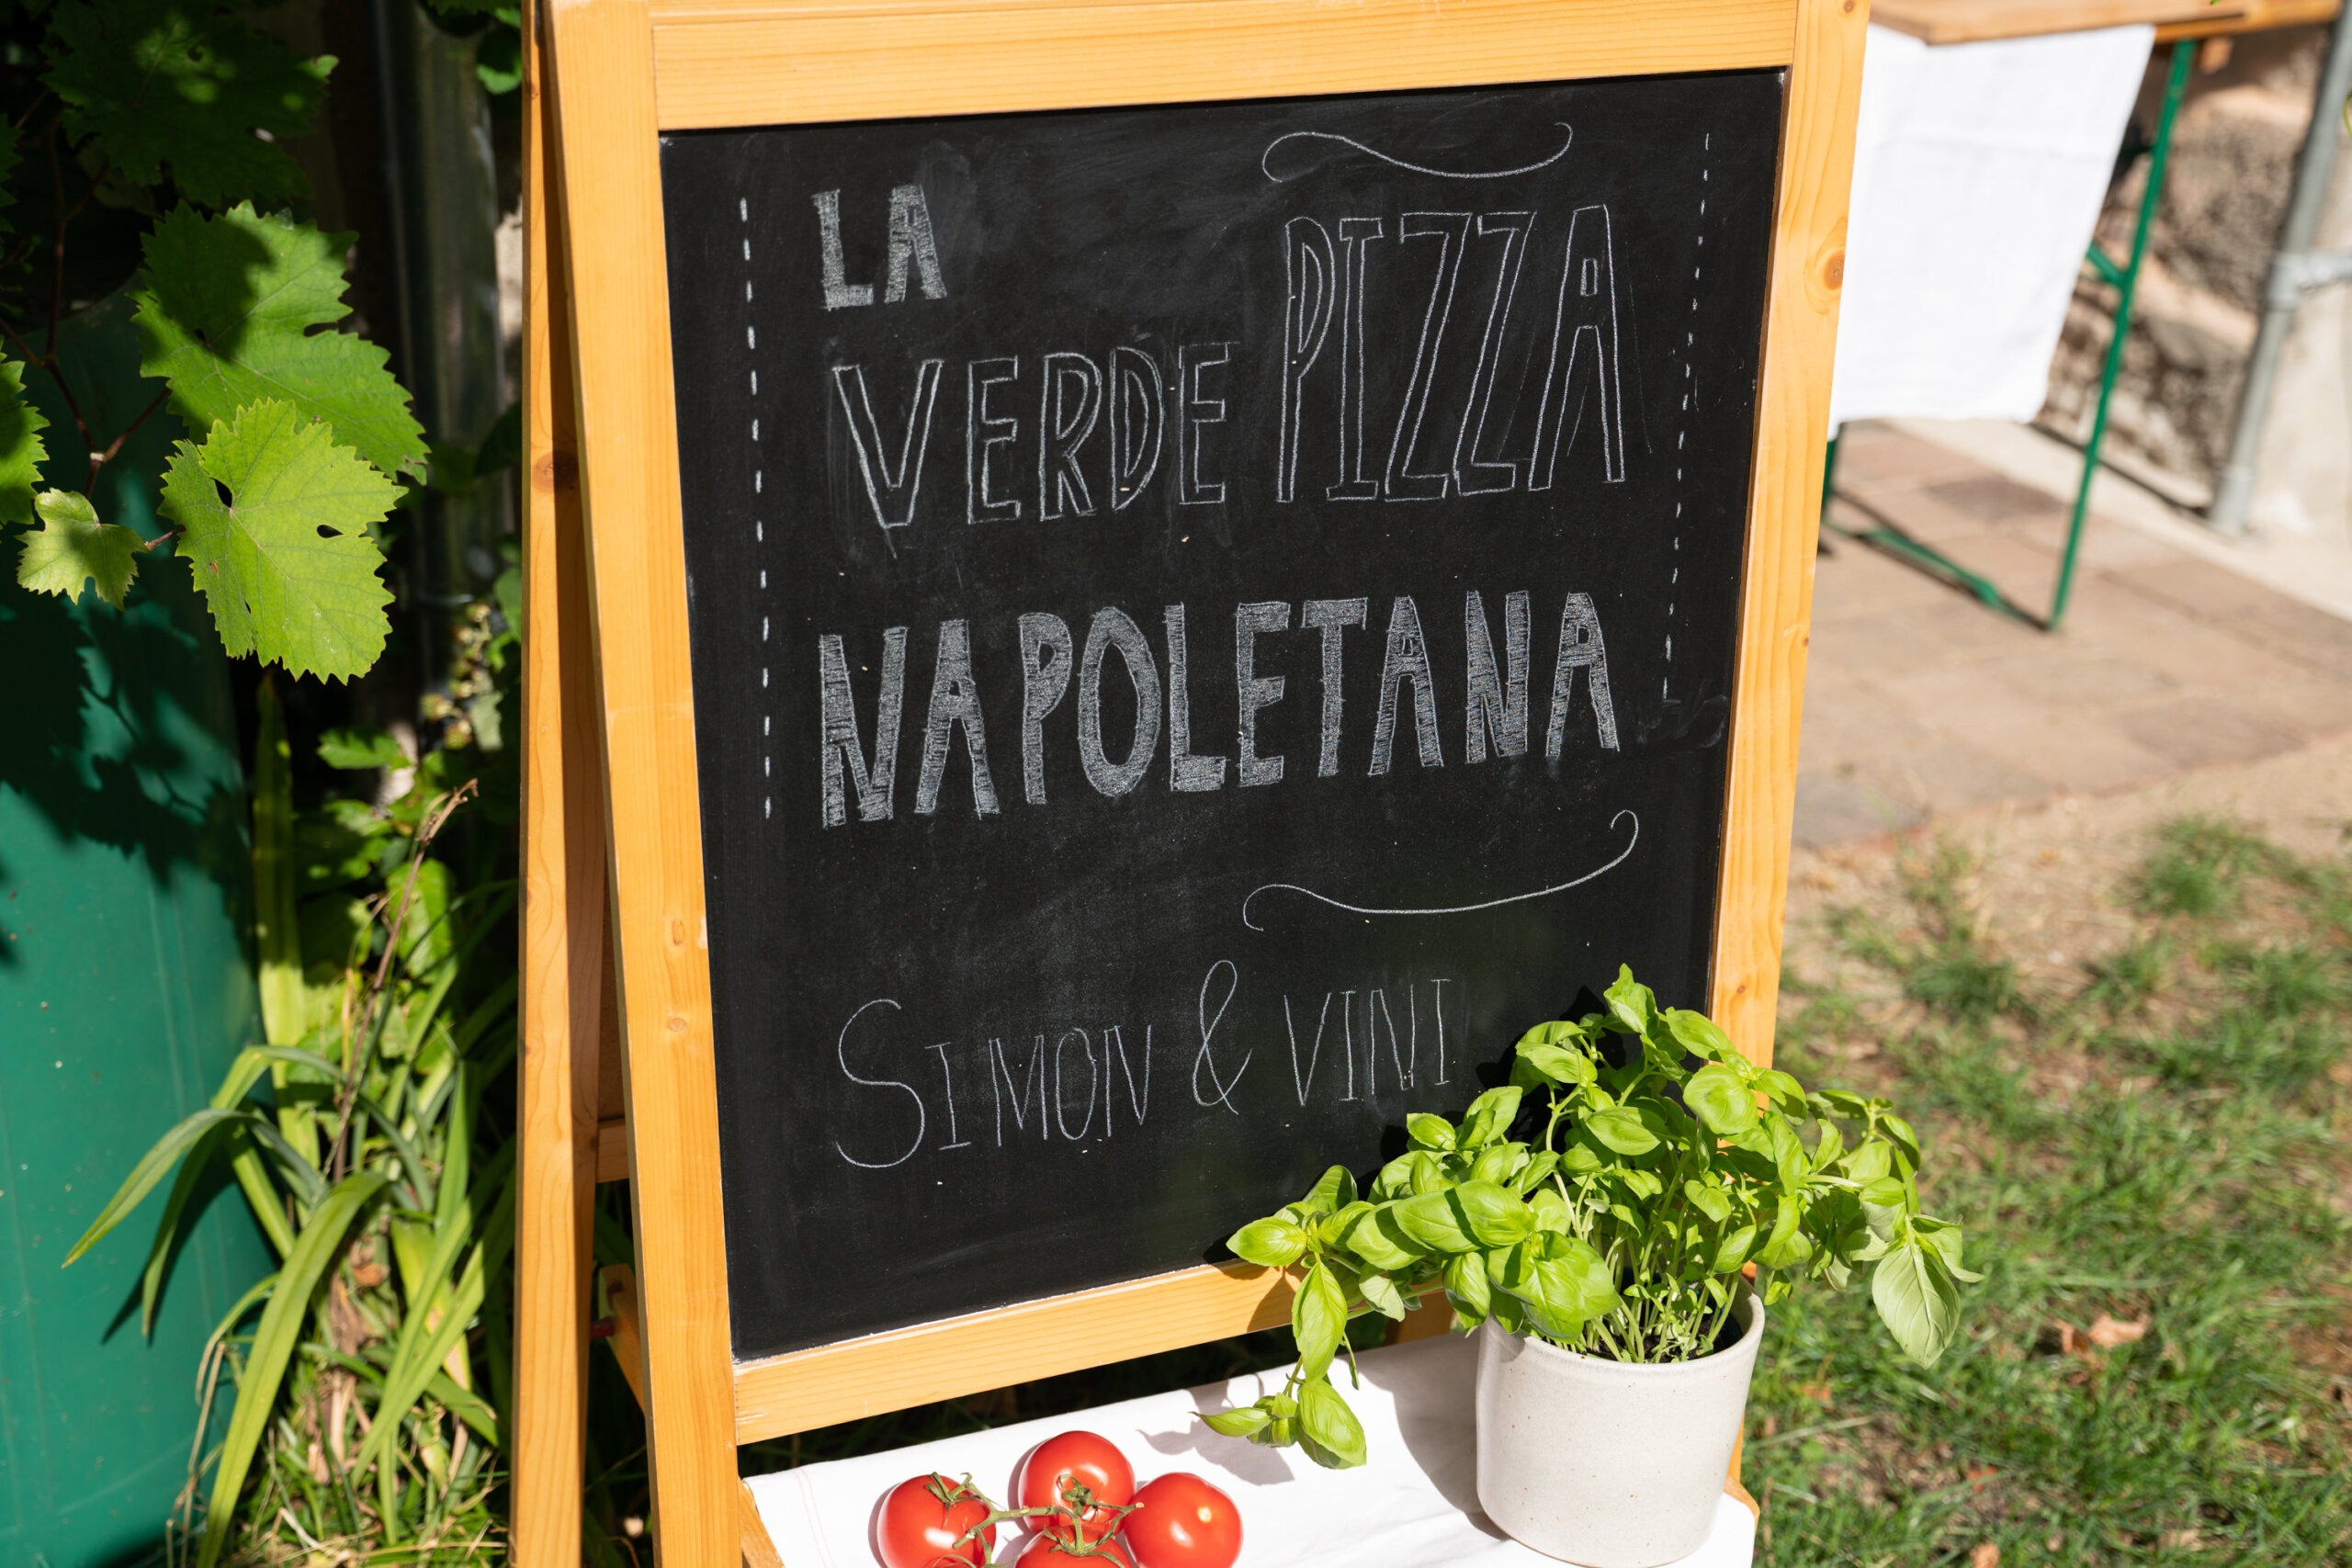 Bild: Tafel mit "la verde Pizza Napoletana", Foto: ver.de